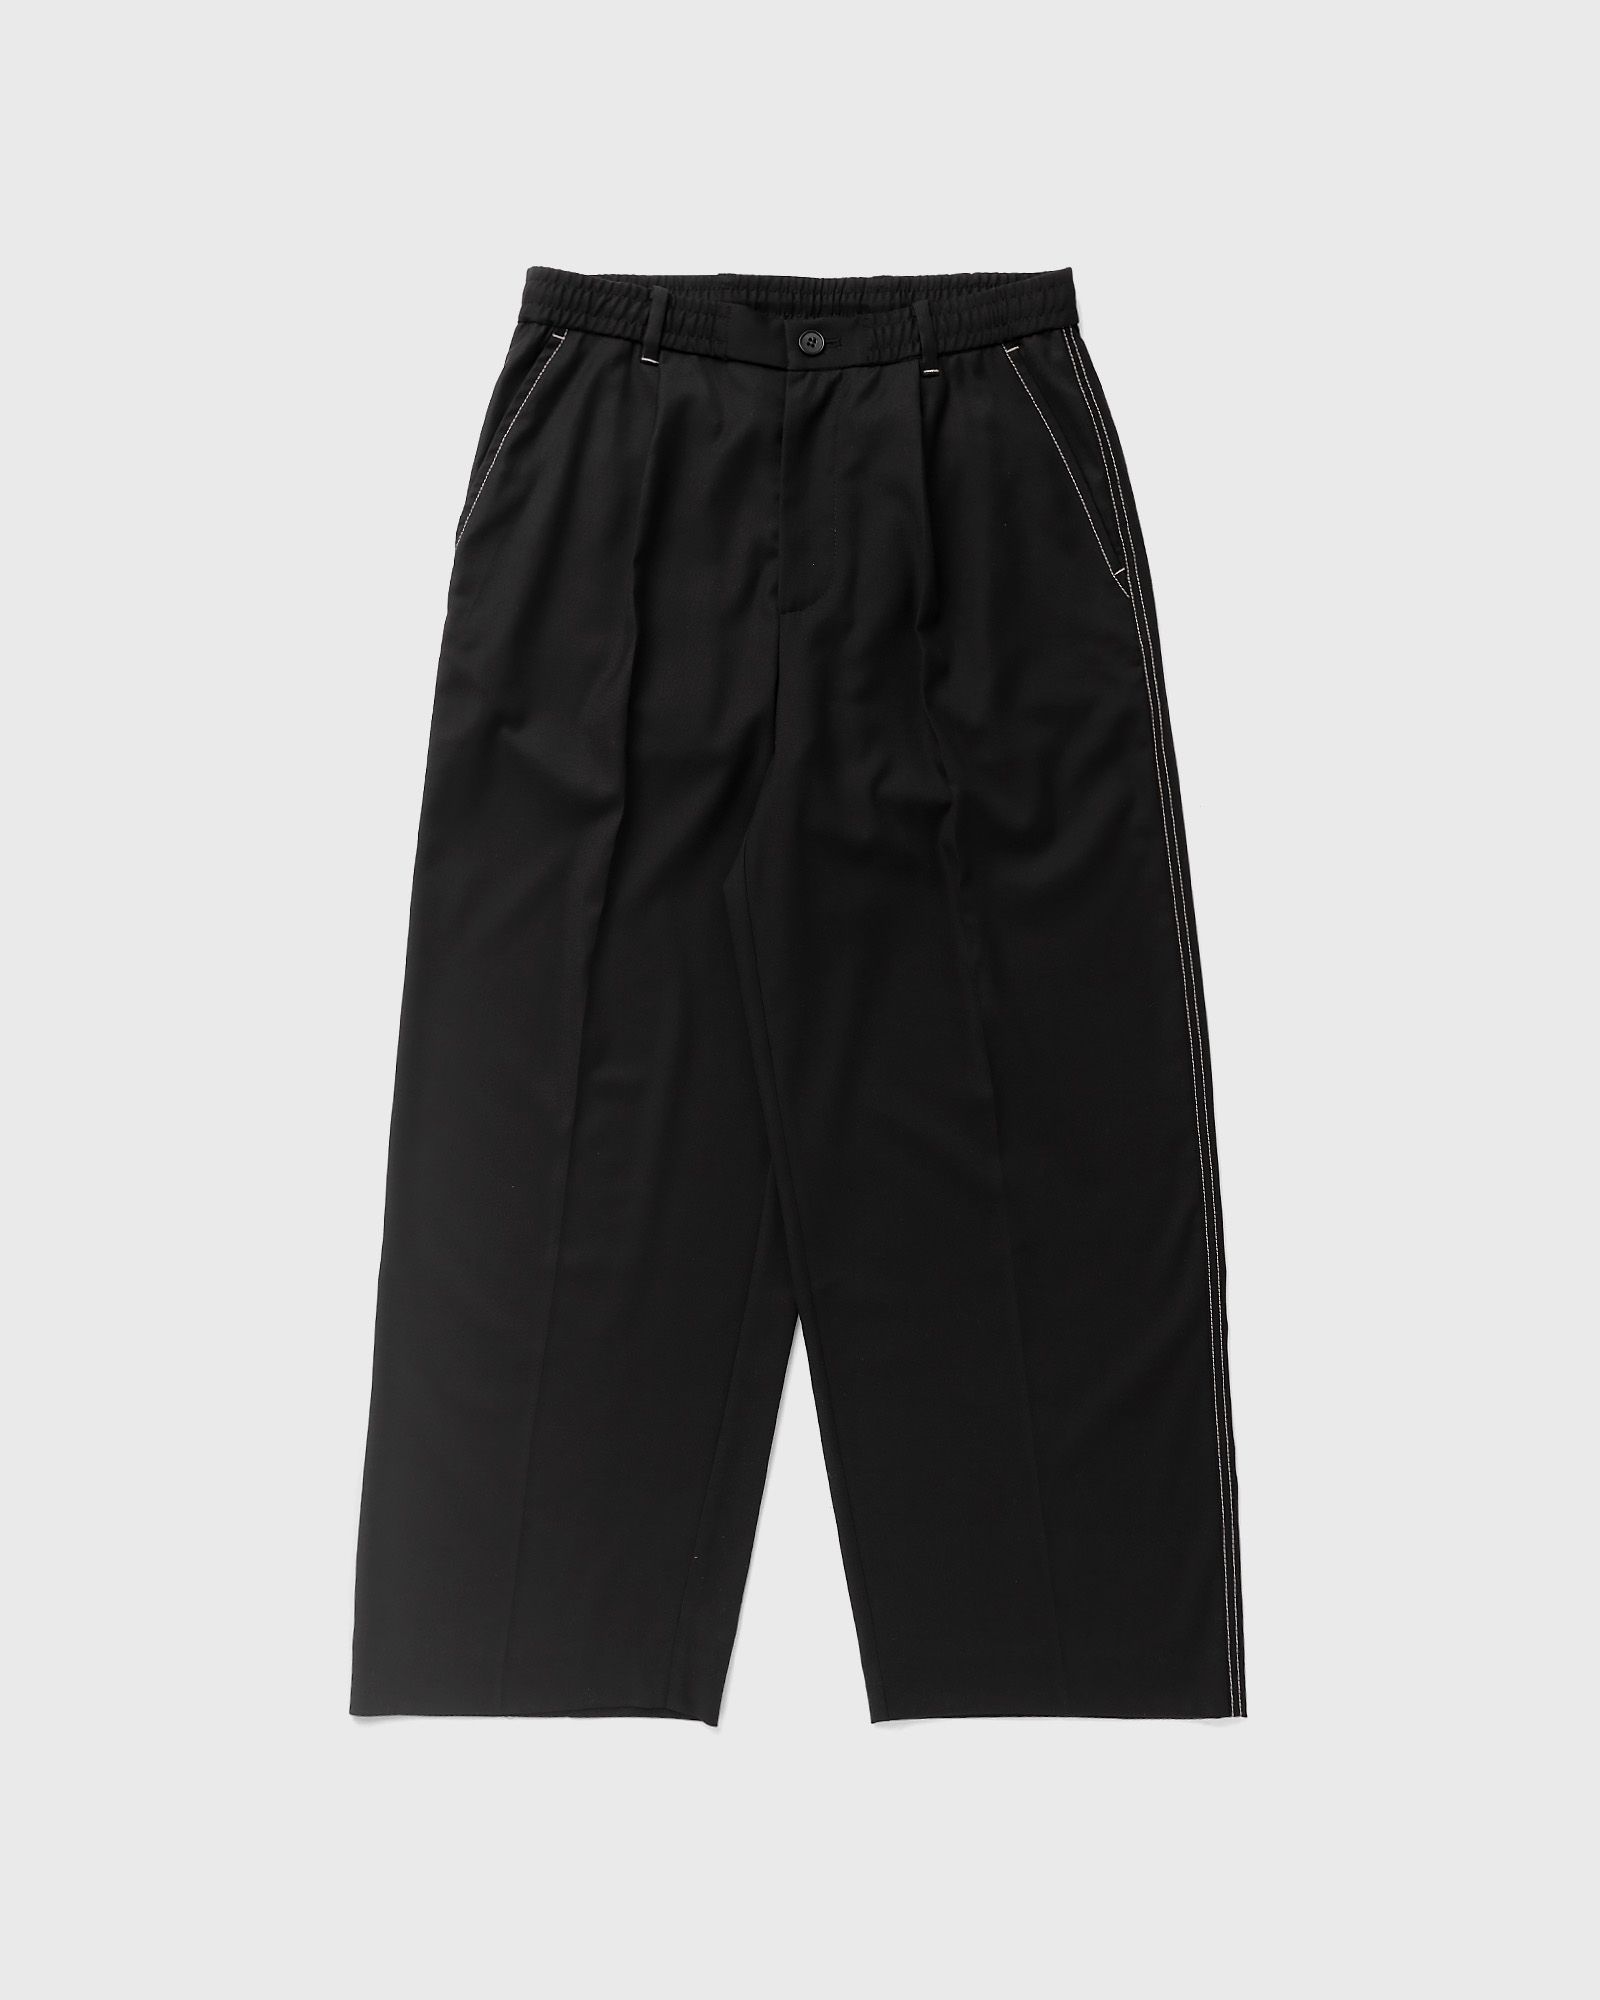 Awake - lightweight wool elasticated woven pant men casual pants black in größe:xl